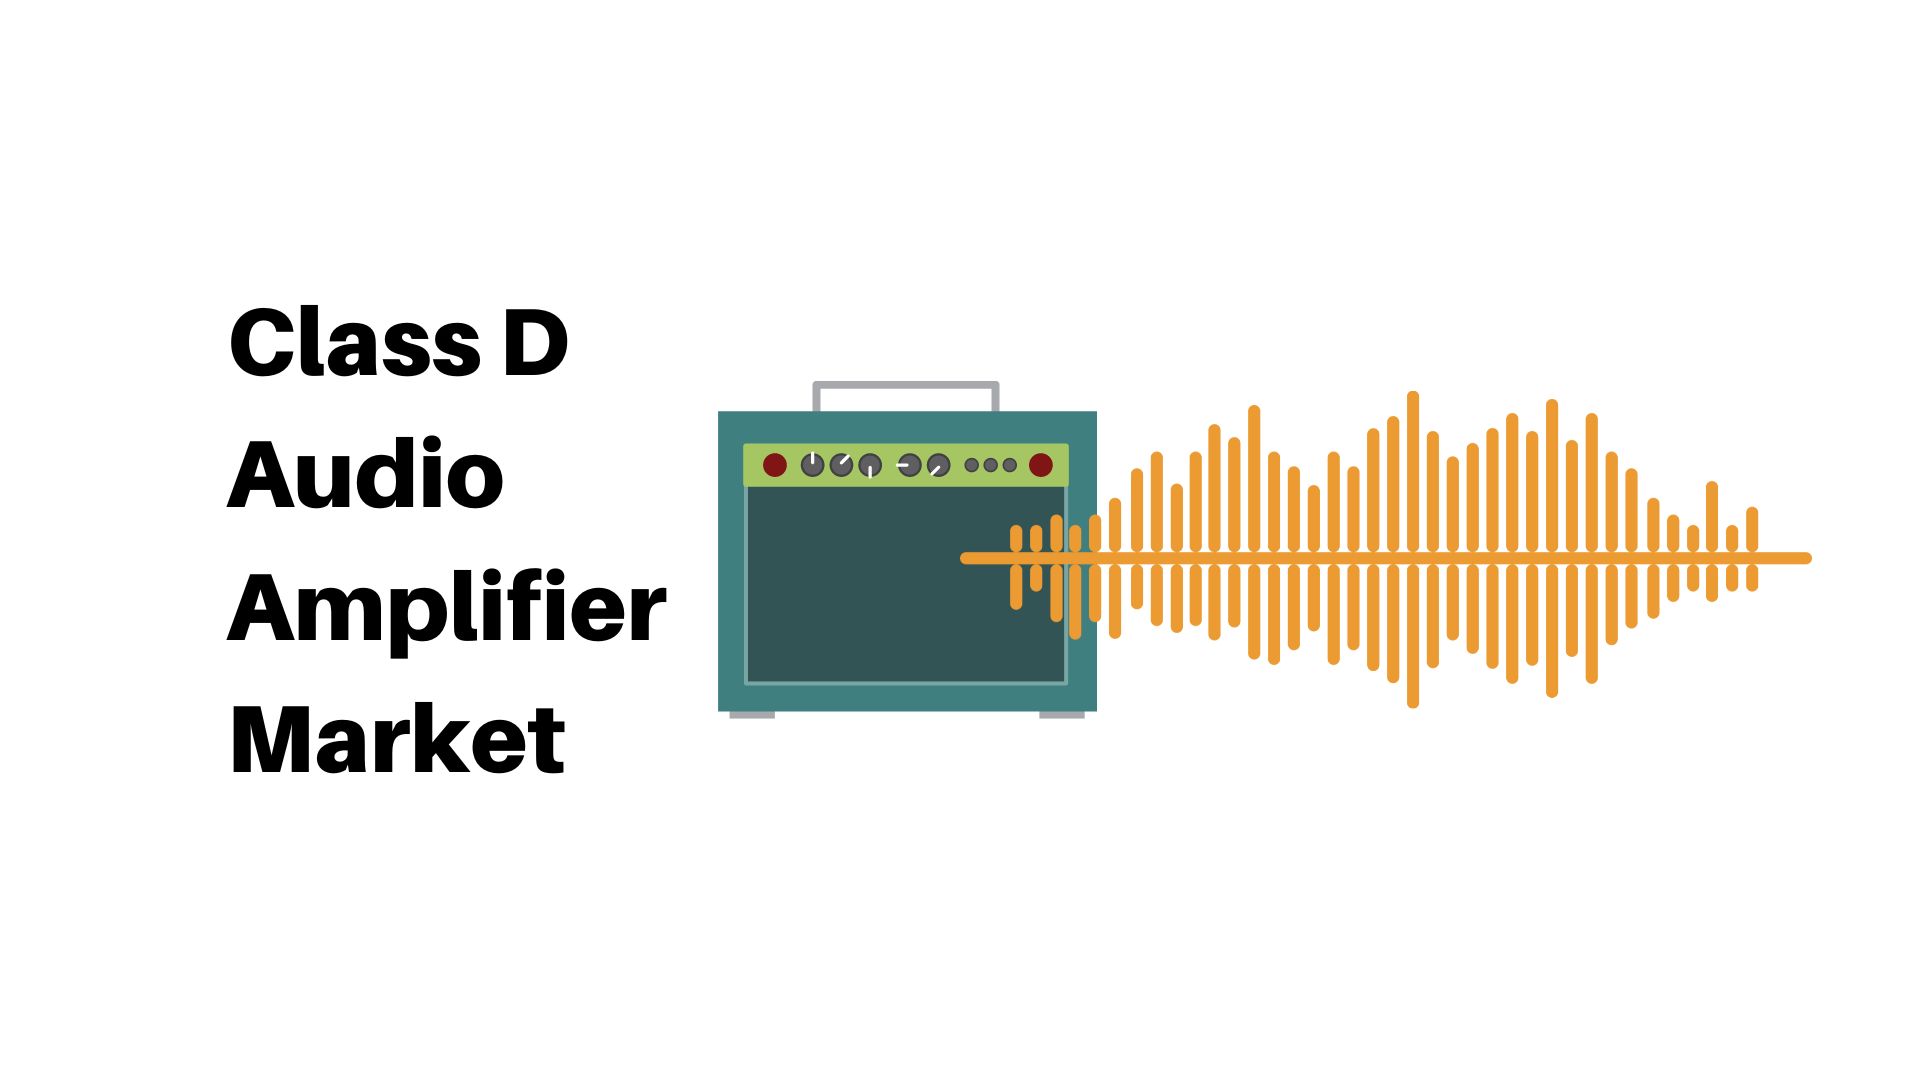 Class D Audio Amplifier Market To Register USD 8.15 Bn Revenue By 2033